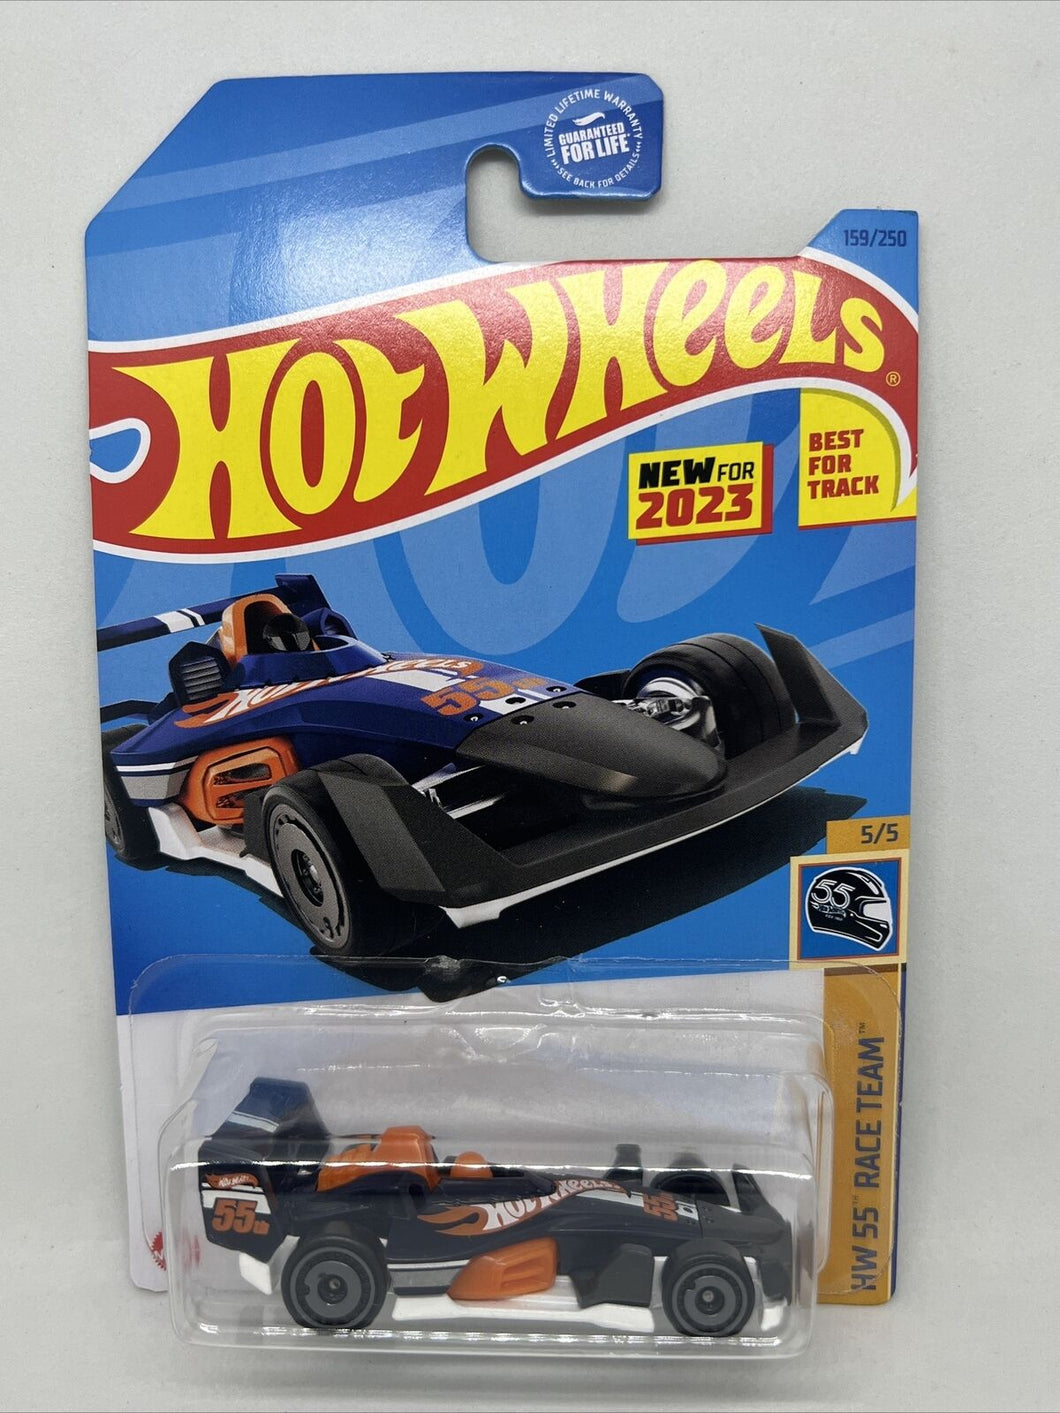 2023 Hot Wheels HW-4-Trac HW 55 Race Team 5/5, 159/250 (Blue)